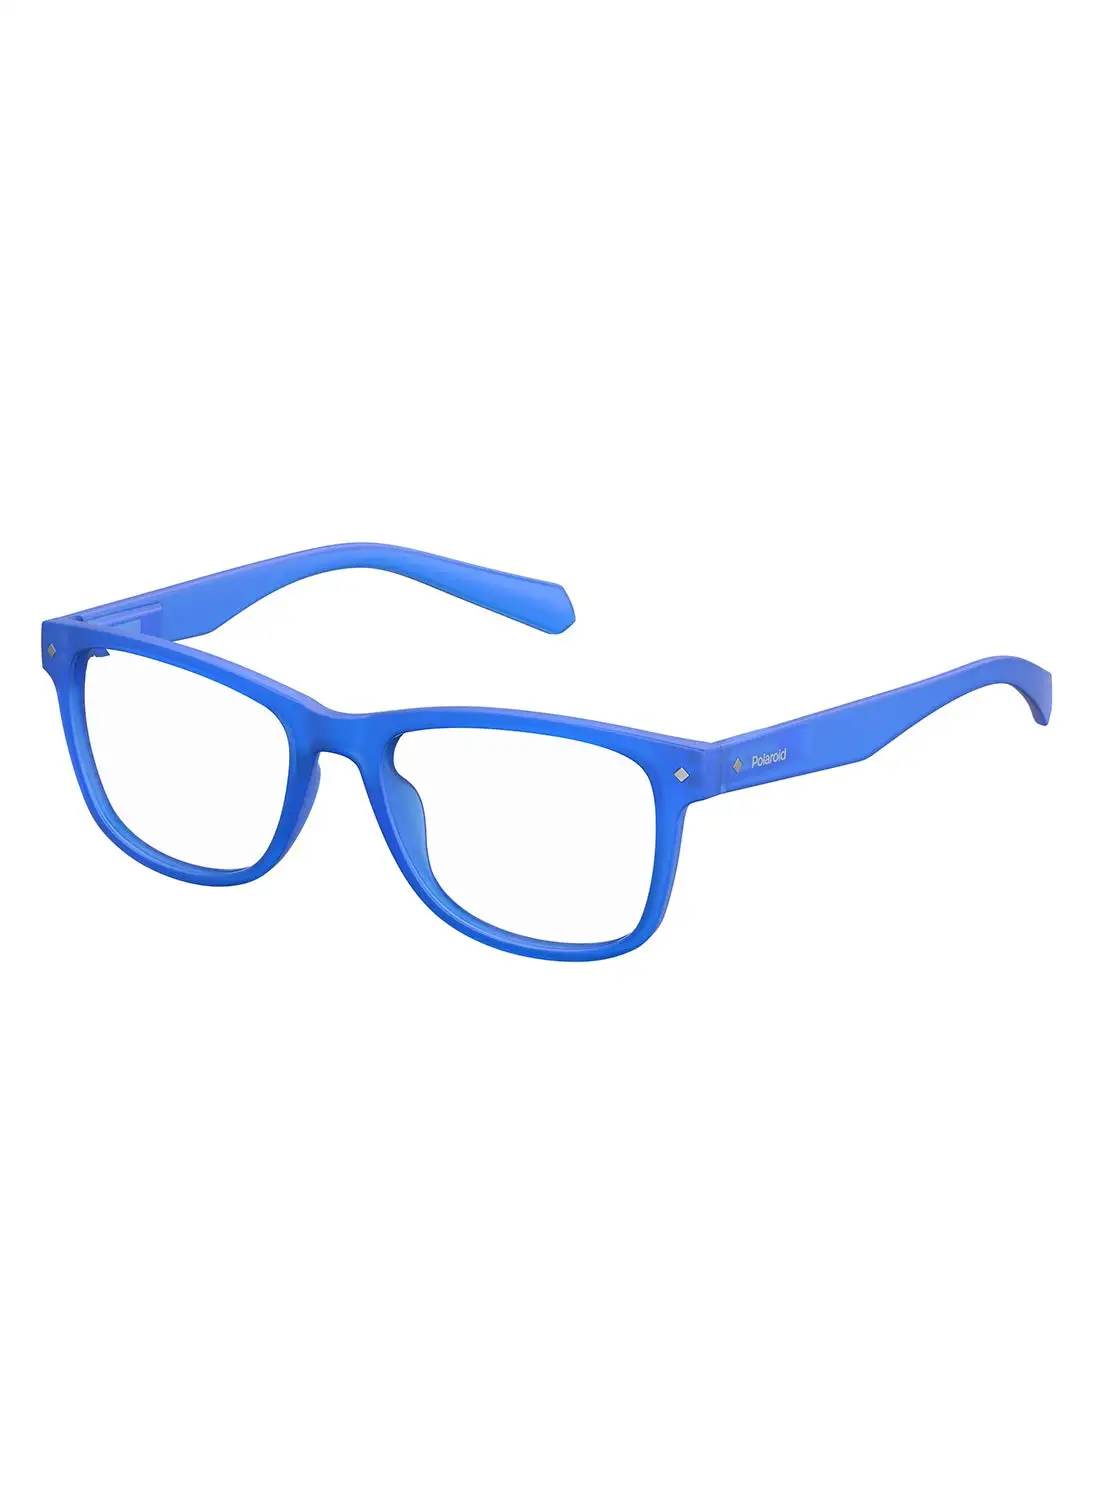 Polaroid Unisex Square Reading Glasses - Pld 0020/R Blue 52 - Lens Size: 52 Mm